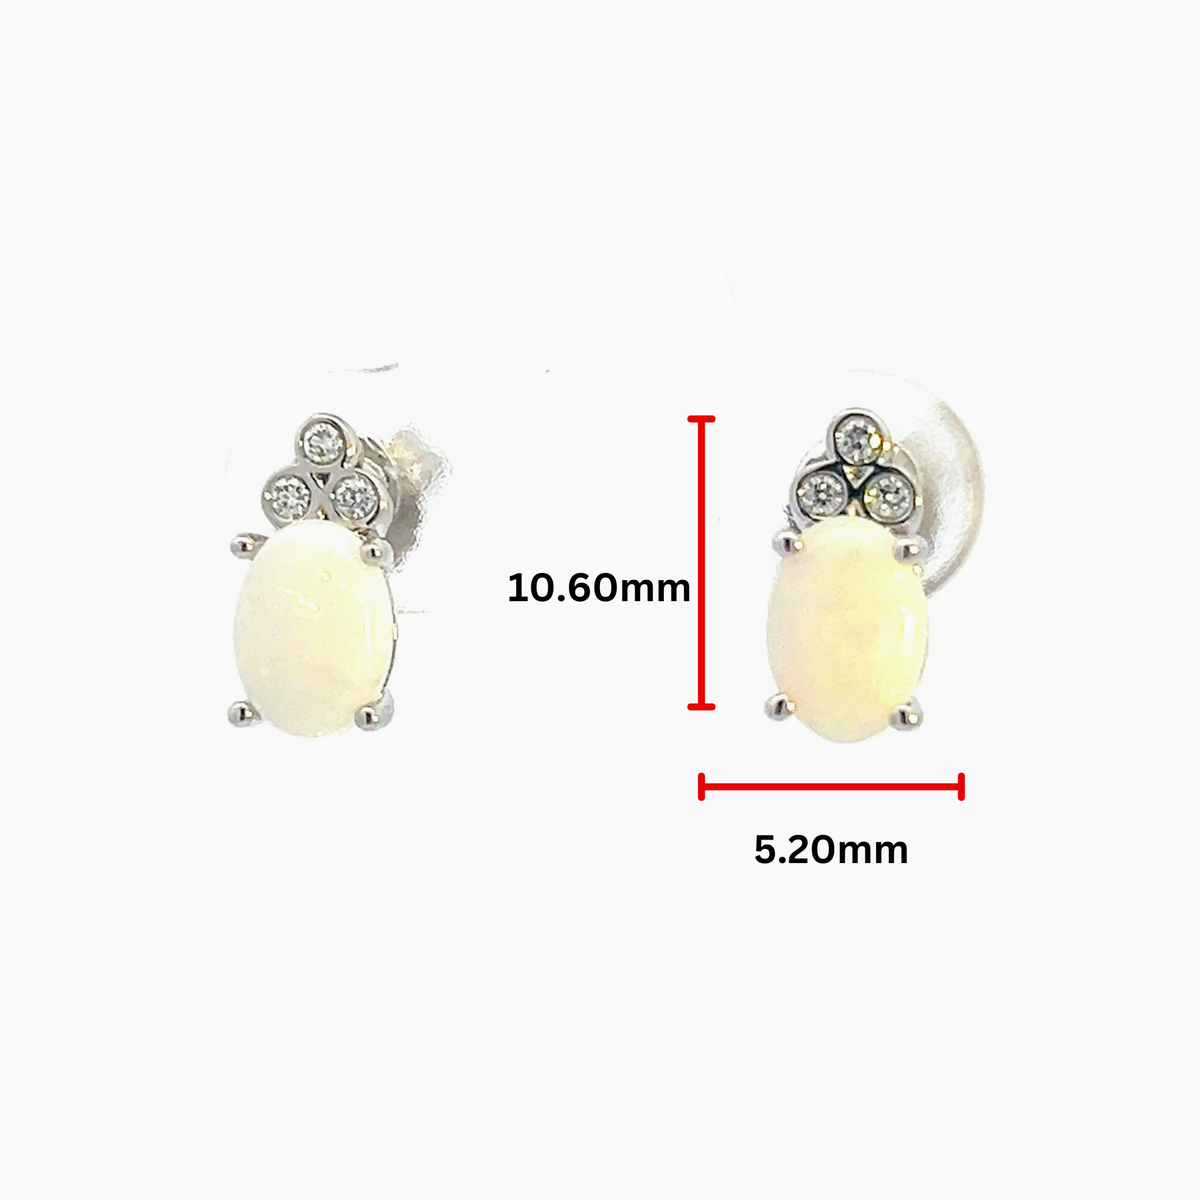 10K White Gold Opal and Diamond Earrings